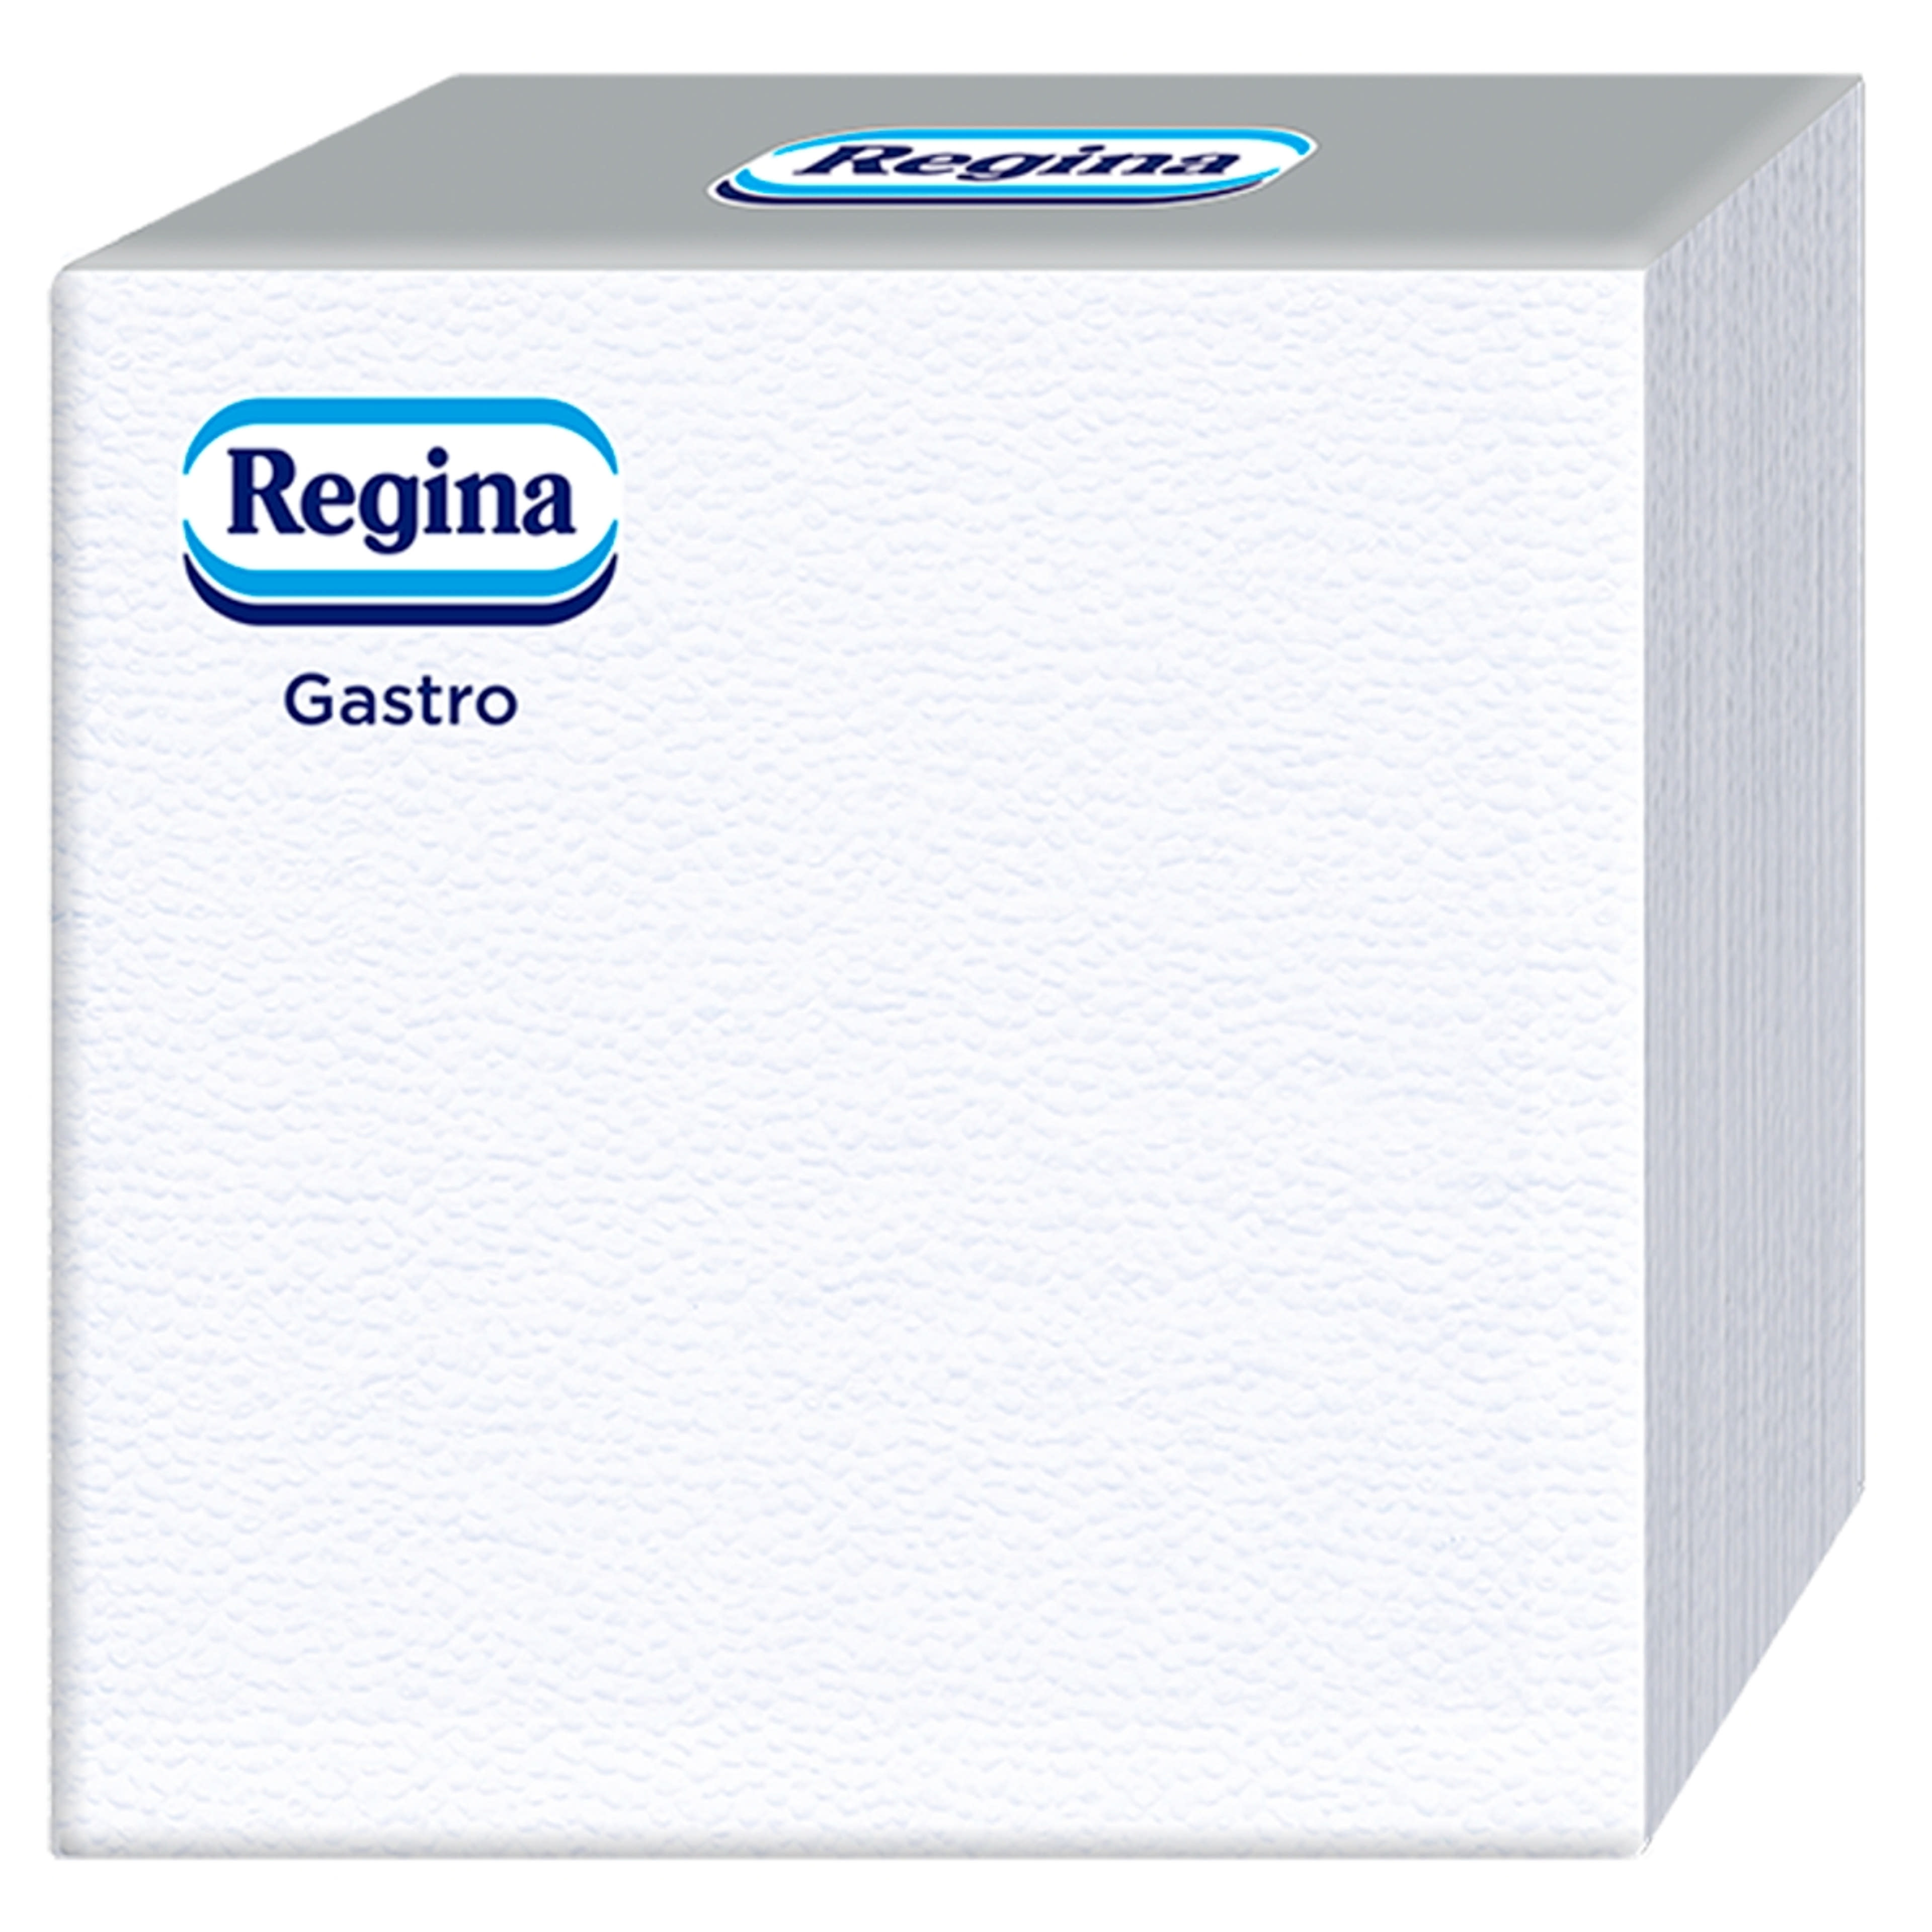 Regina Gastro, 1 rétegű szalvéta 18x18 - 600 db